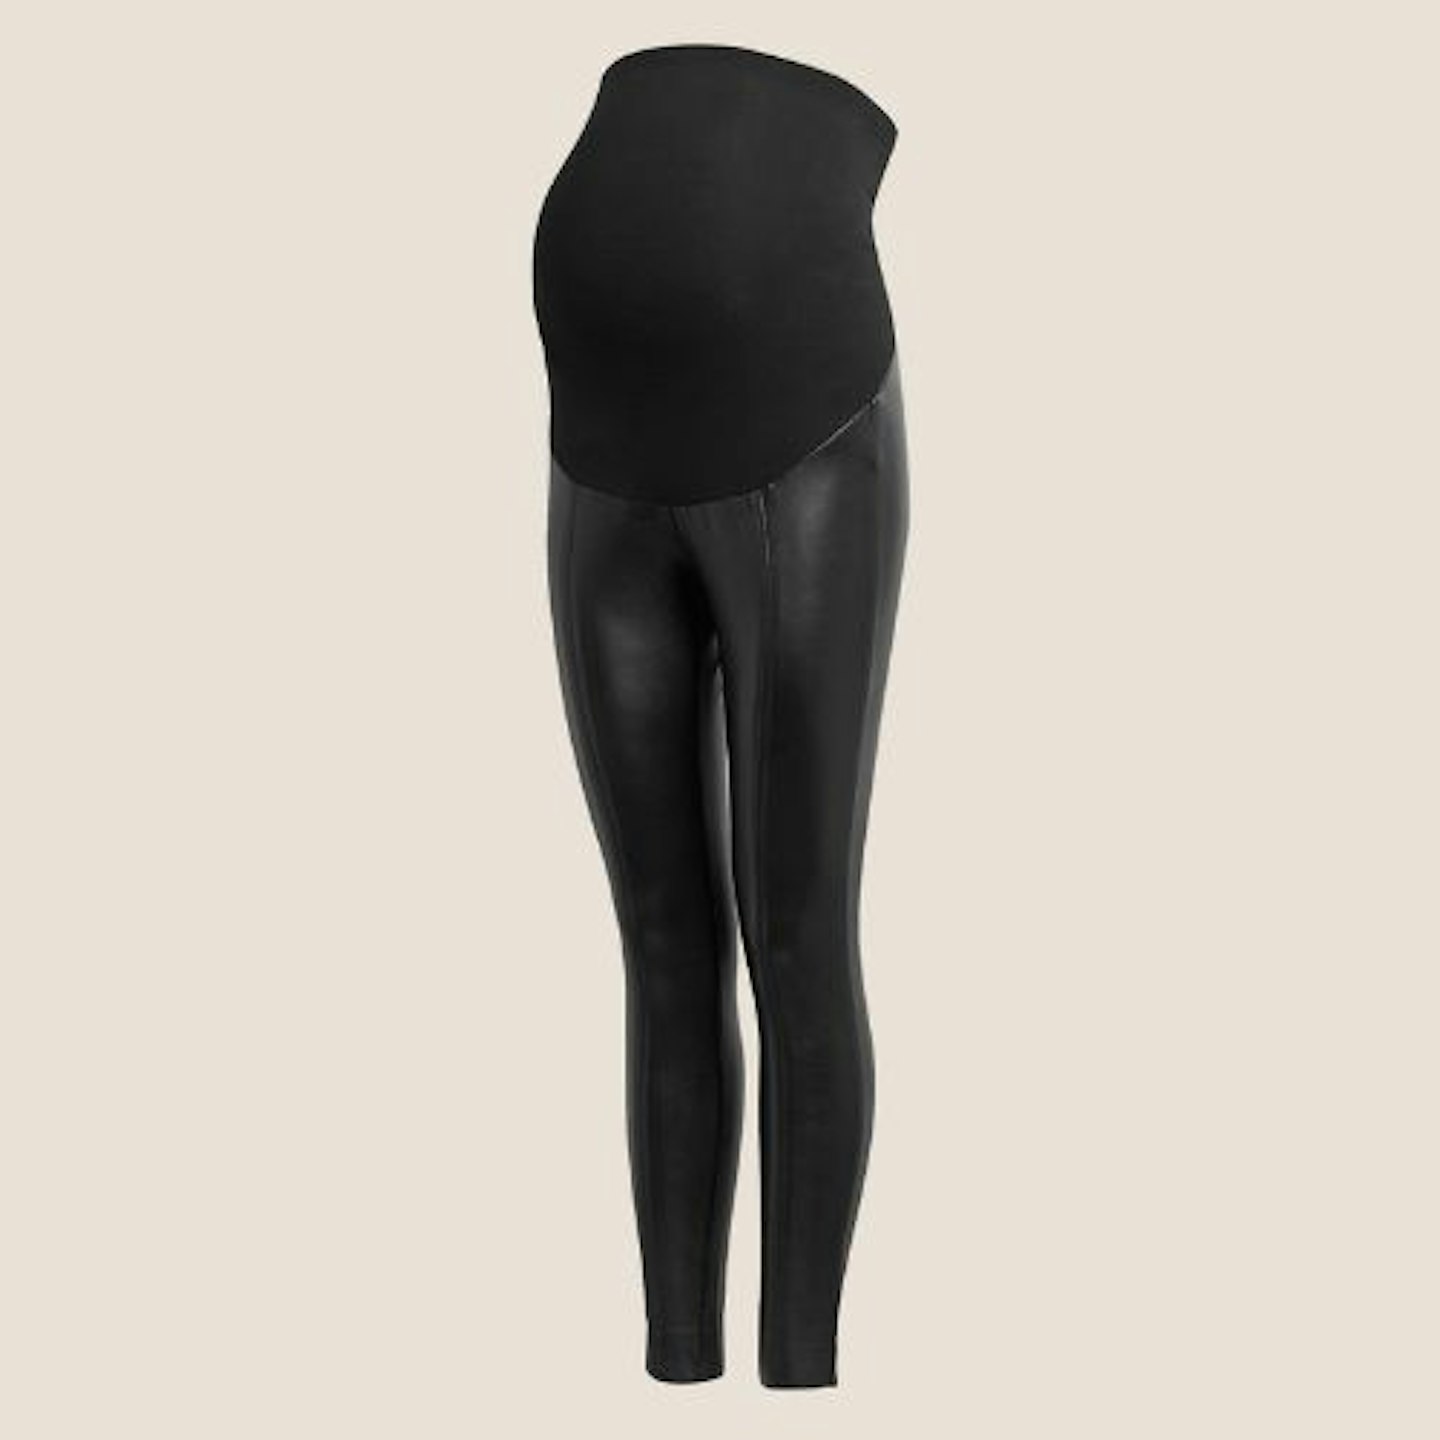 M&S Collection 2pk Leggings, Size 18, Black/Black